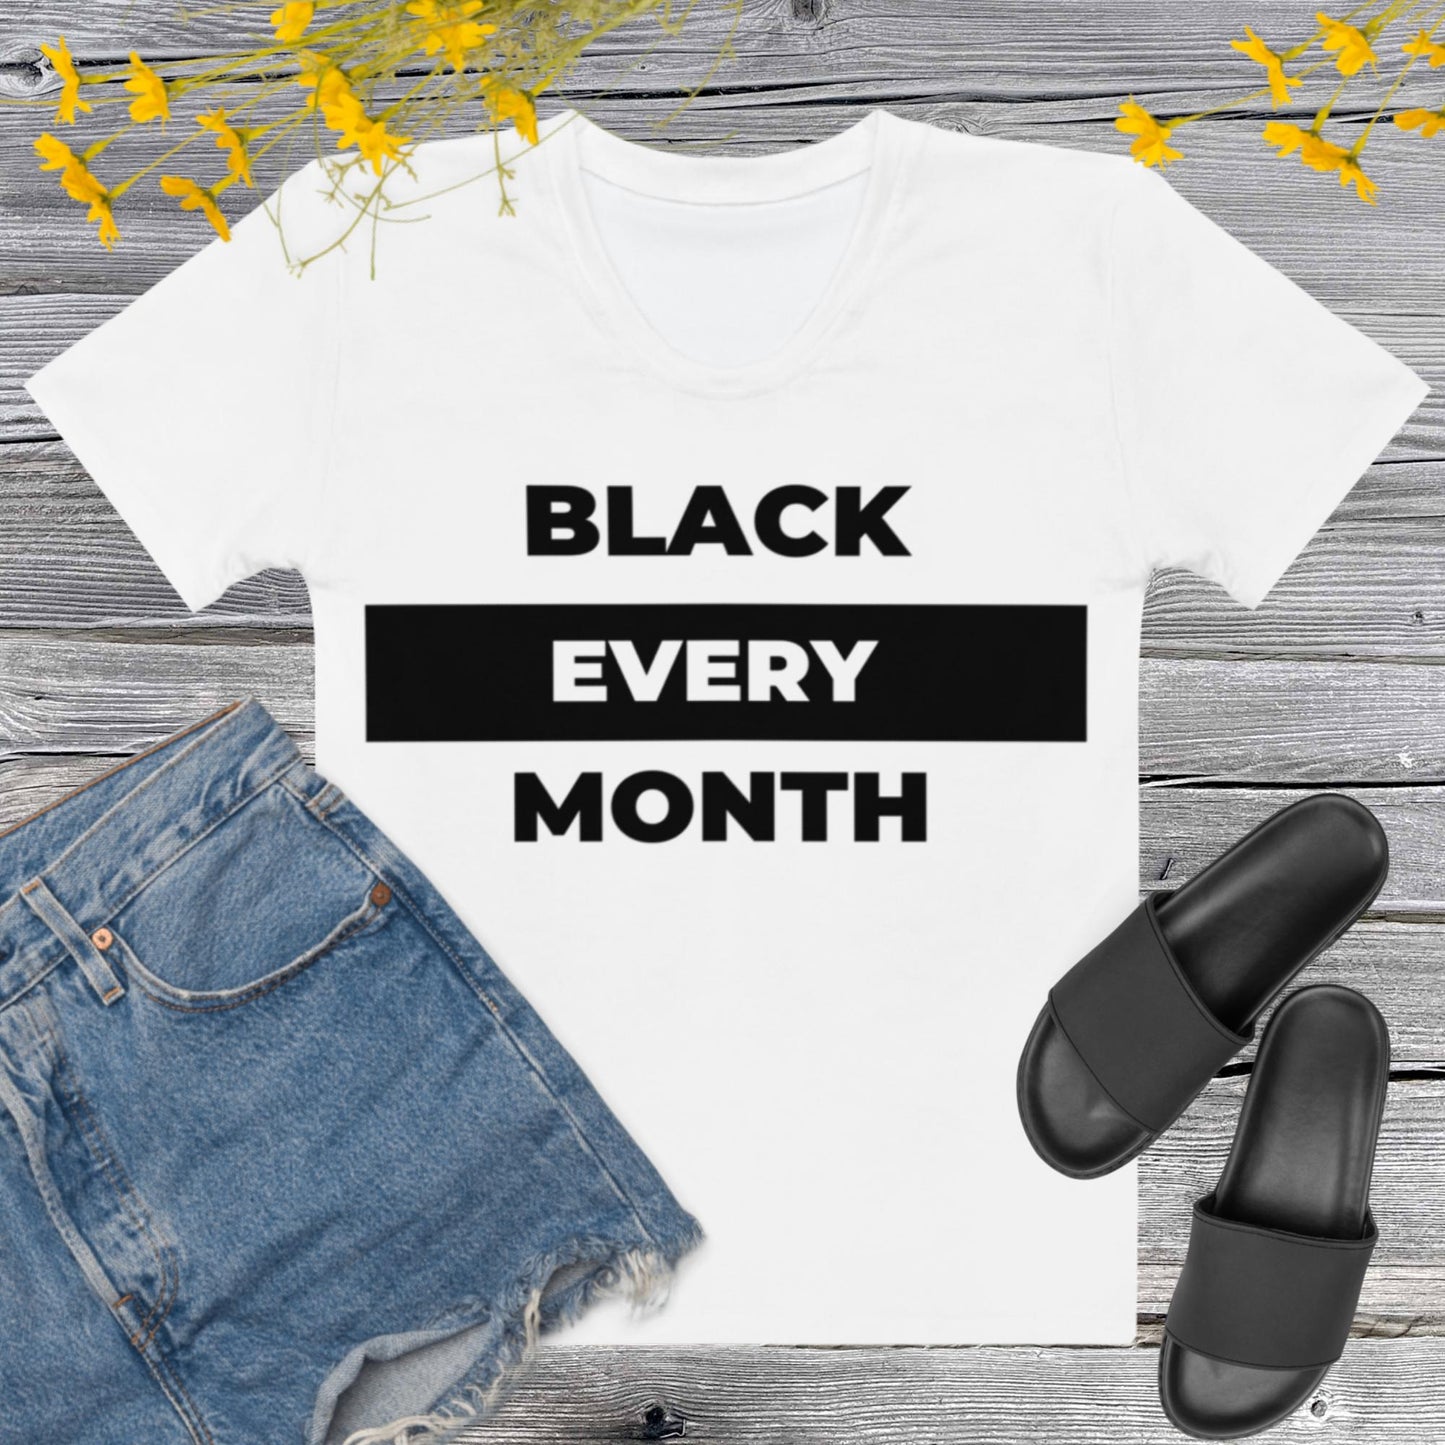 Black Every Month - Women's T-shirt